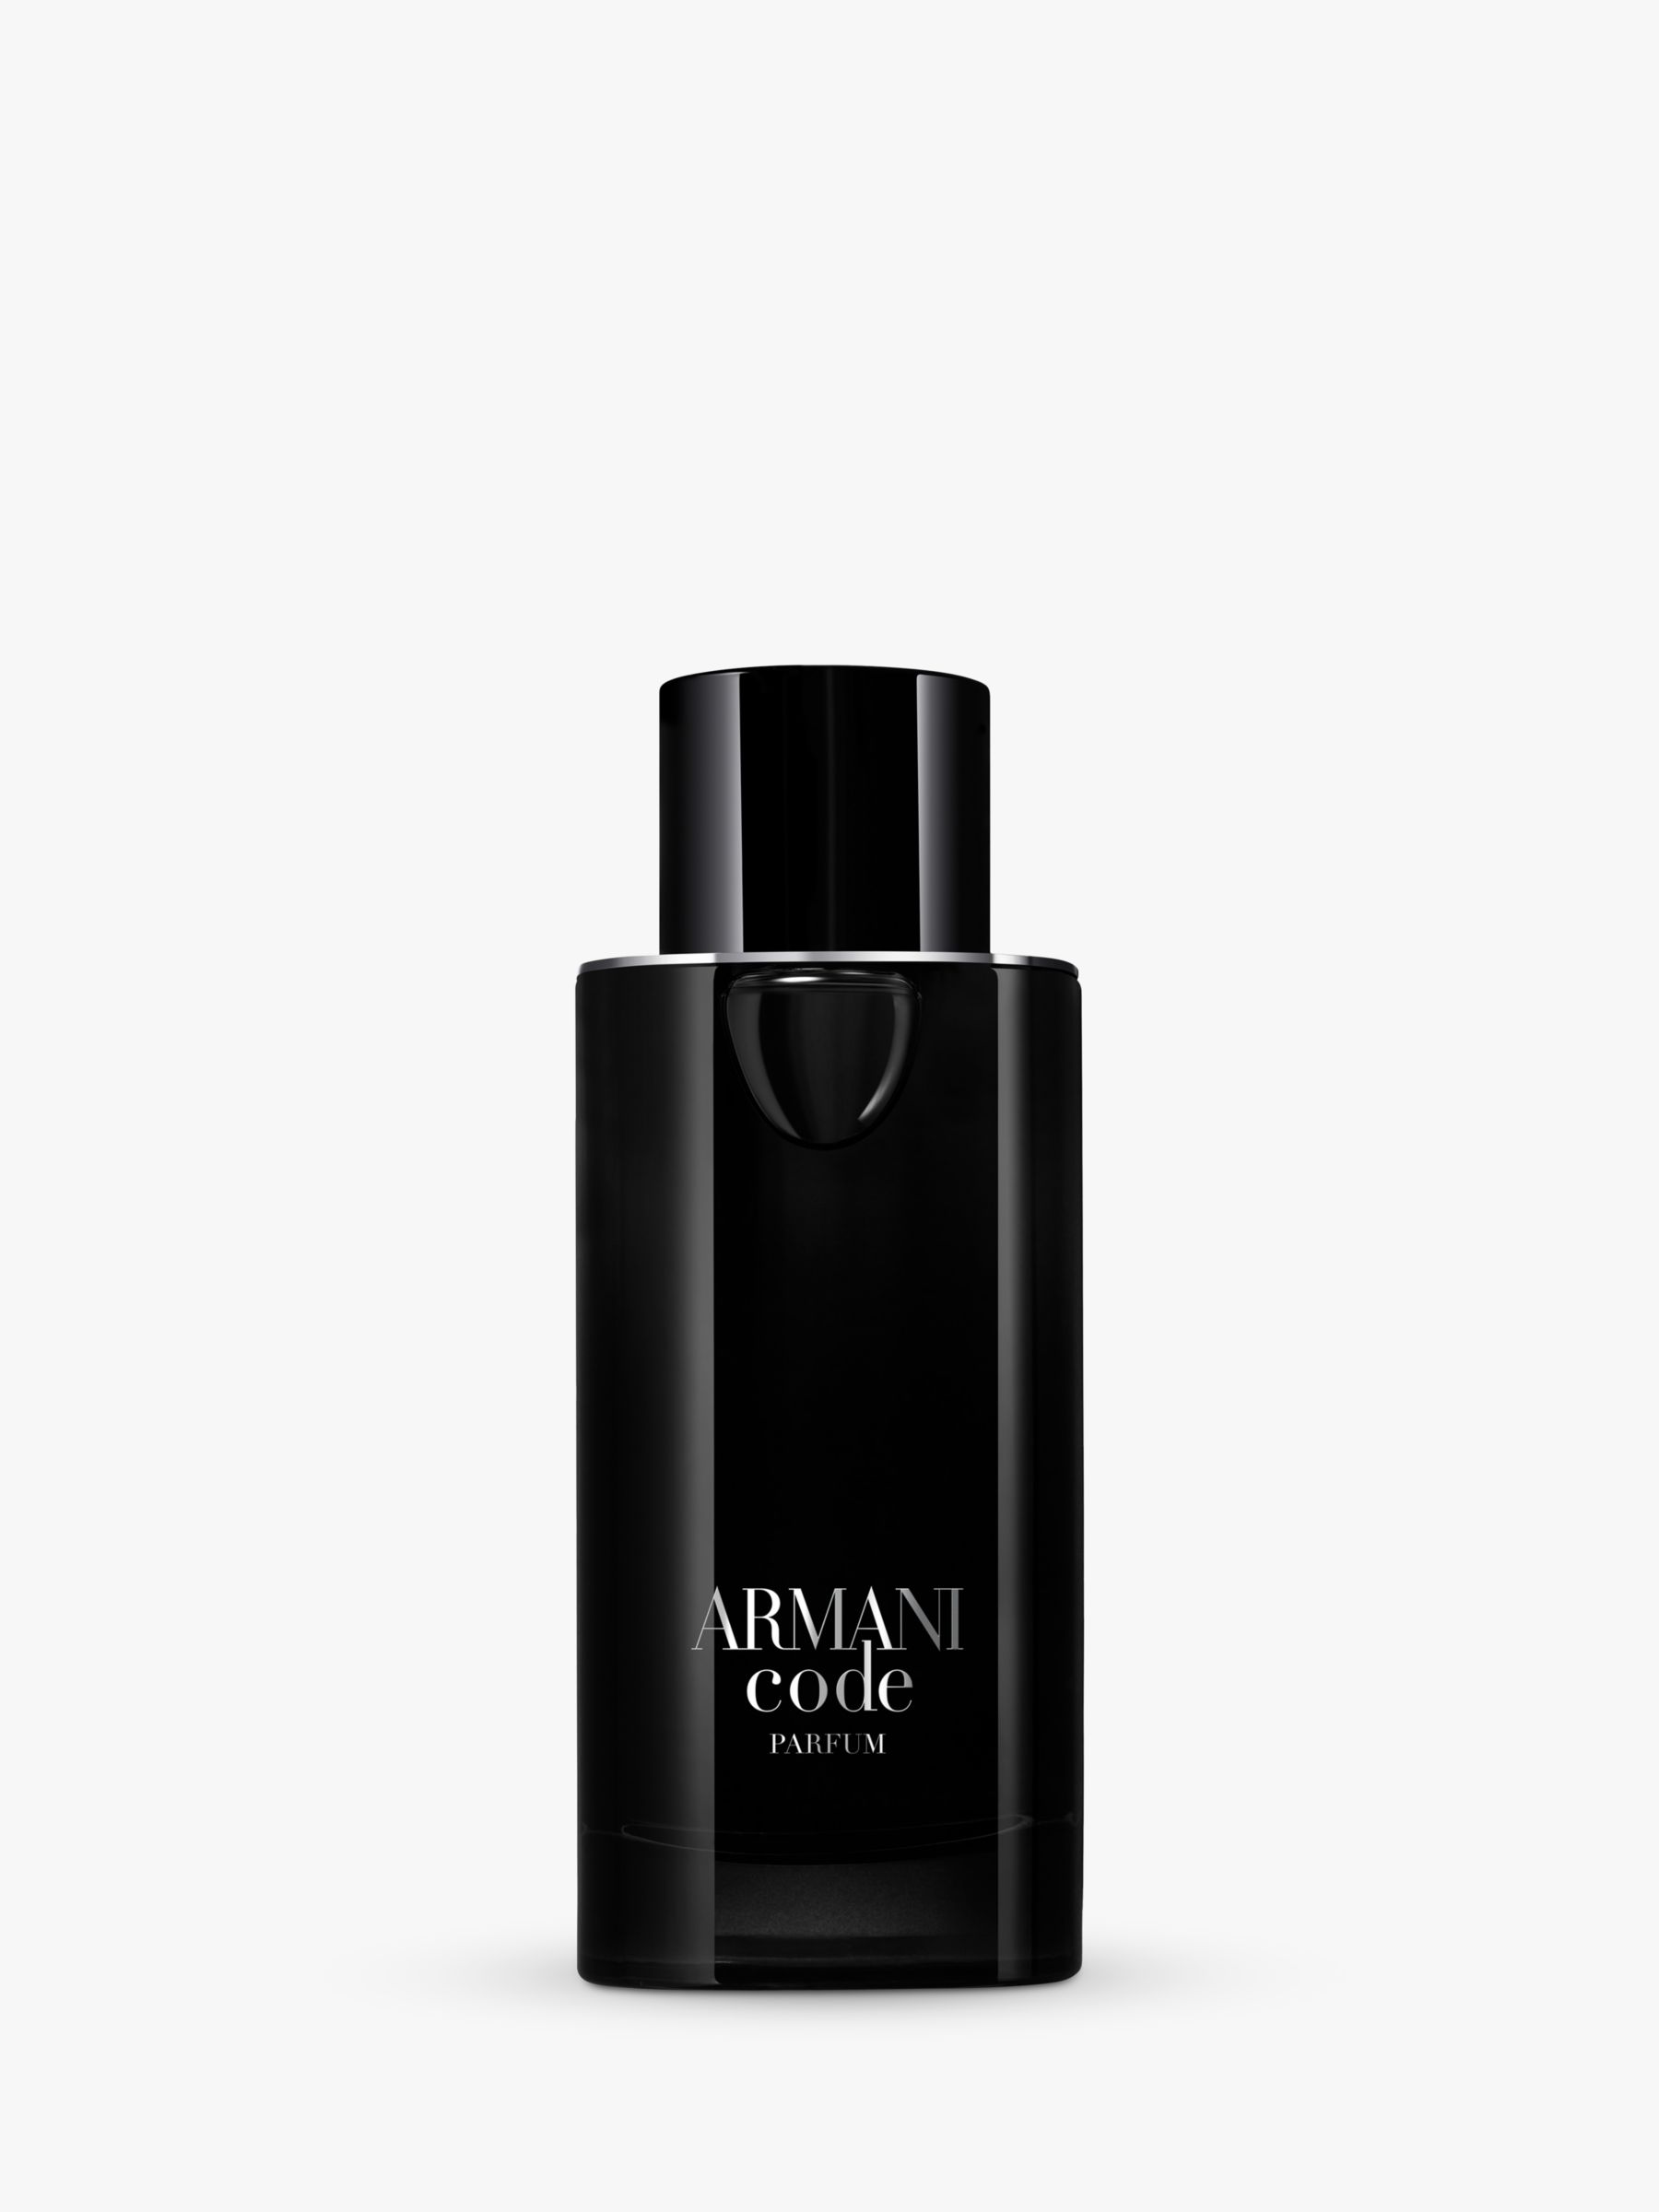 Giorgio Armani Code Le Parfum Eau de Parfum, 125ml